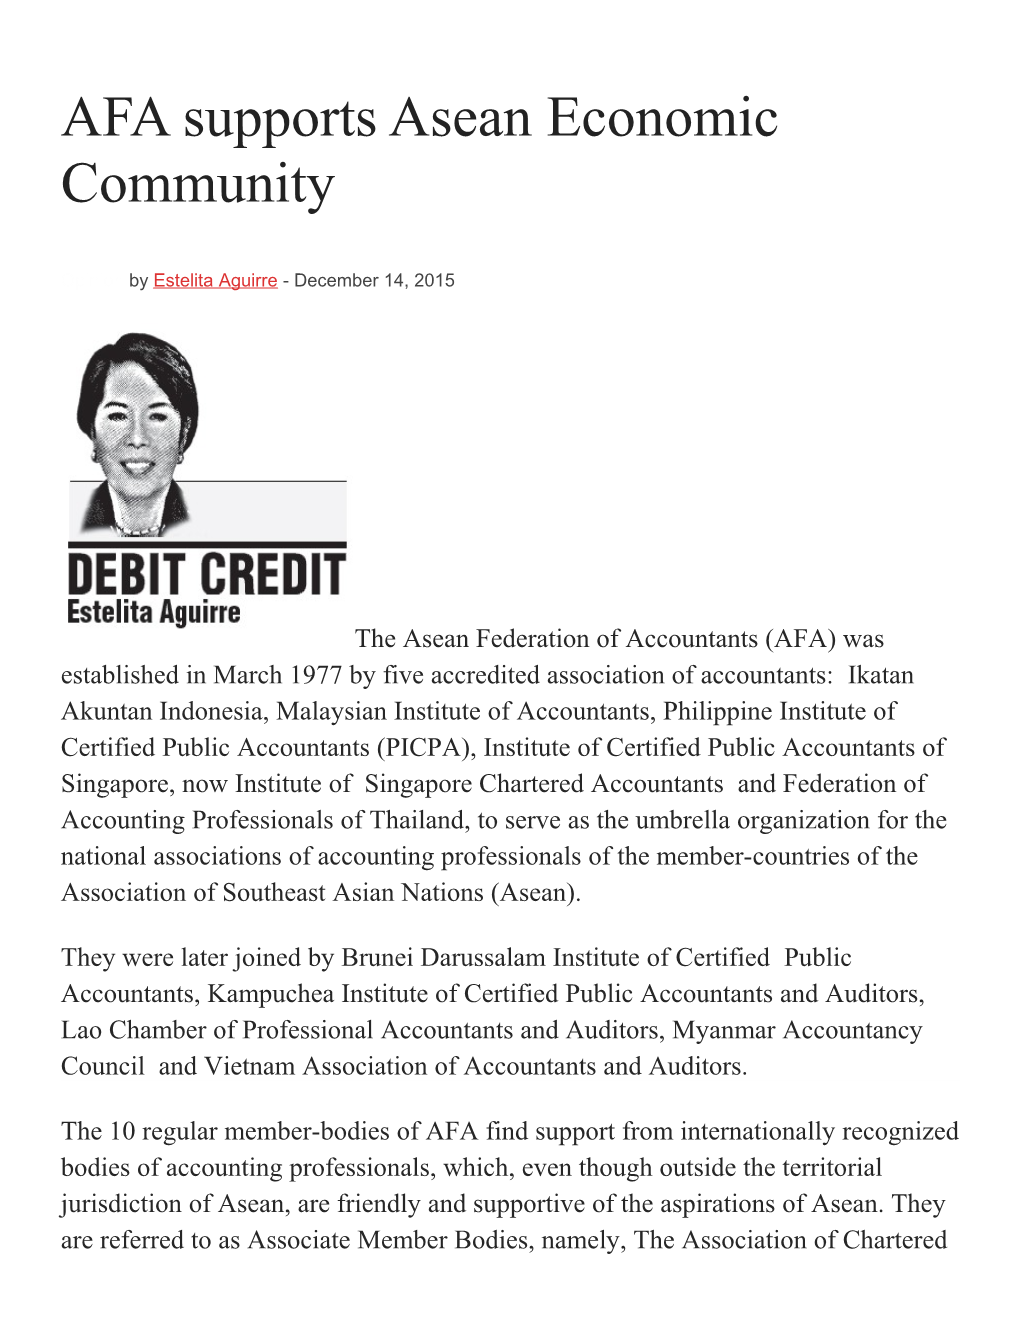 AFA Supports Asean Economic Community